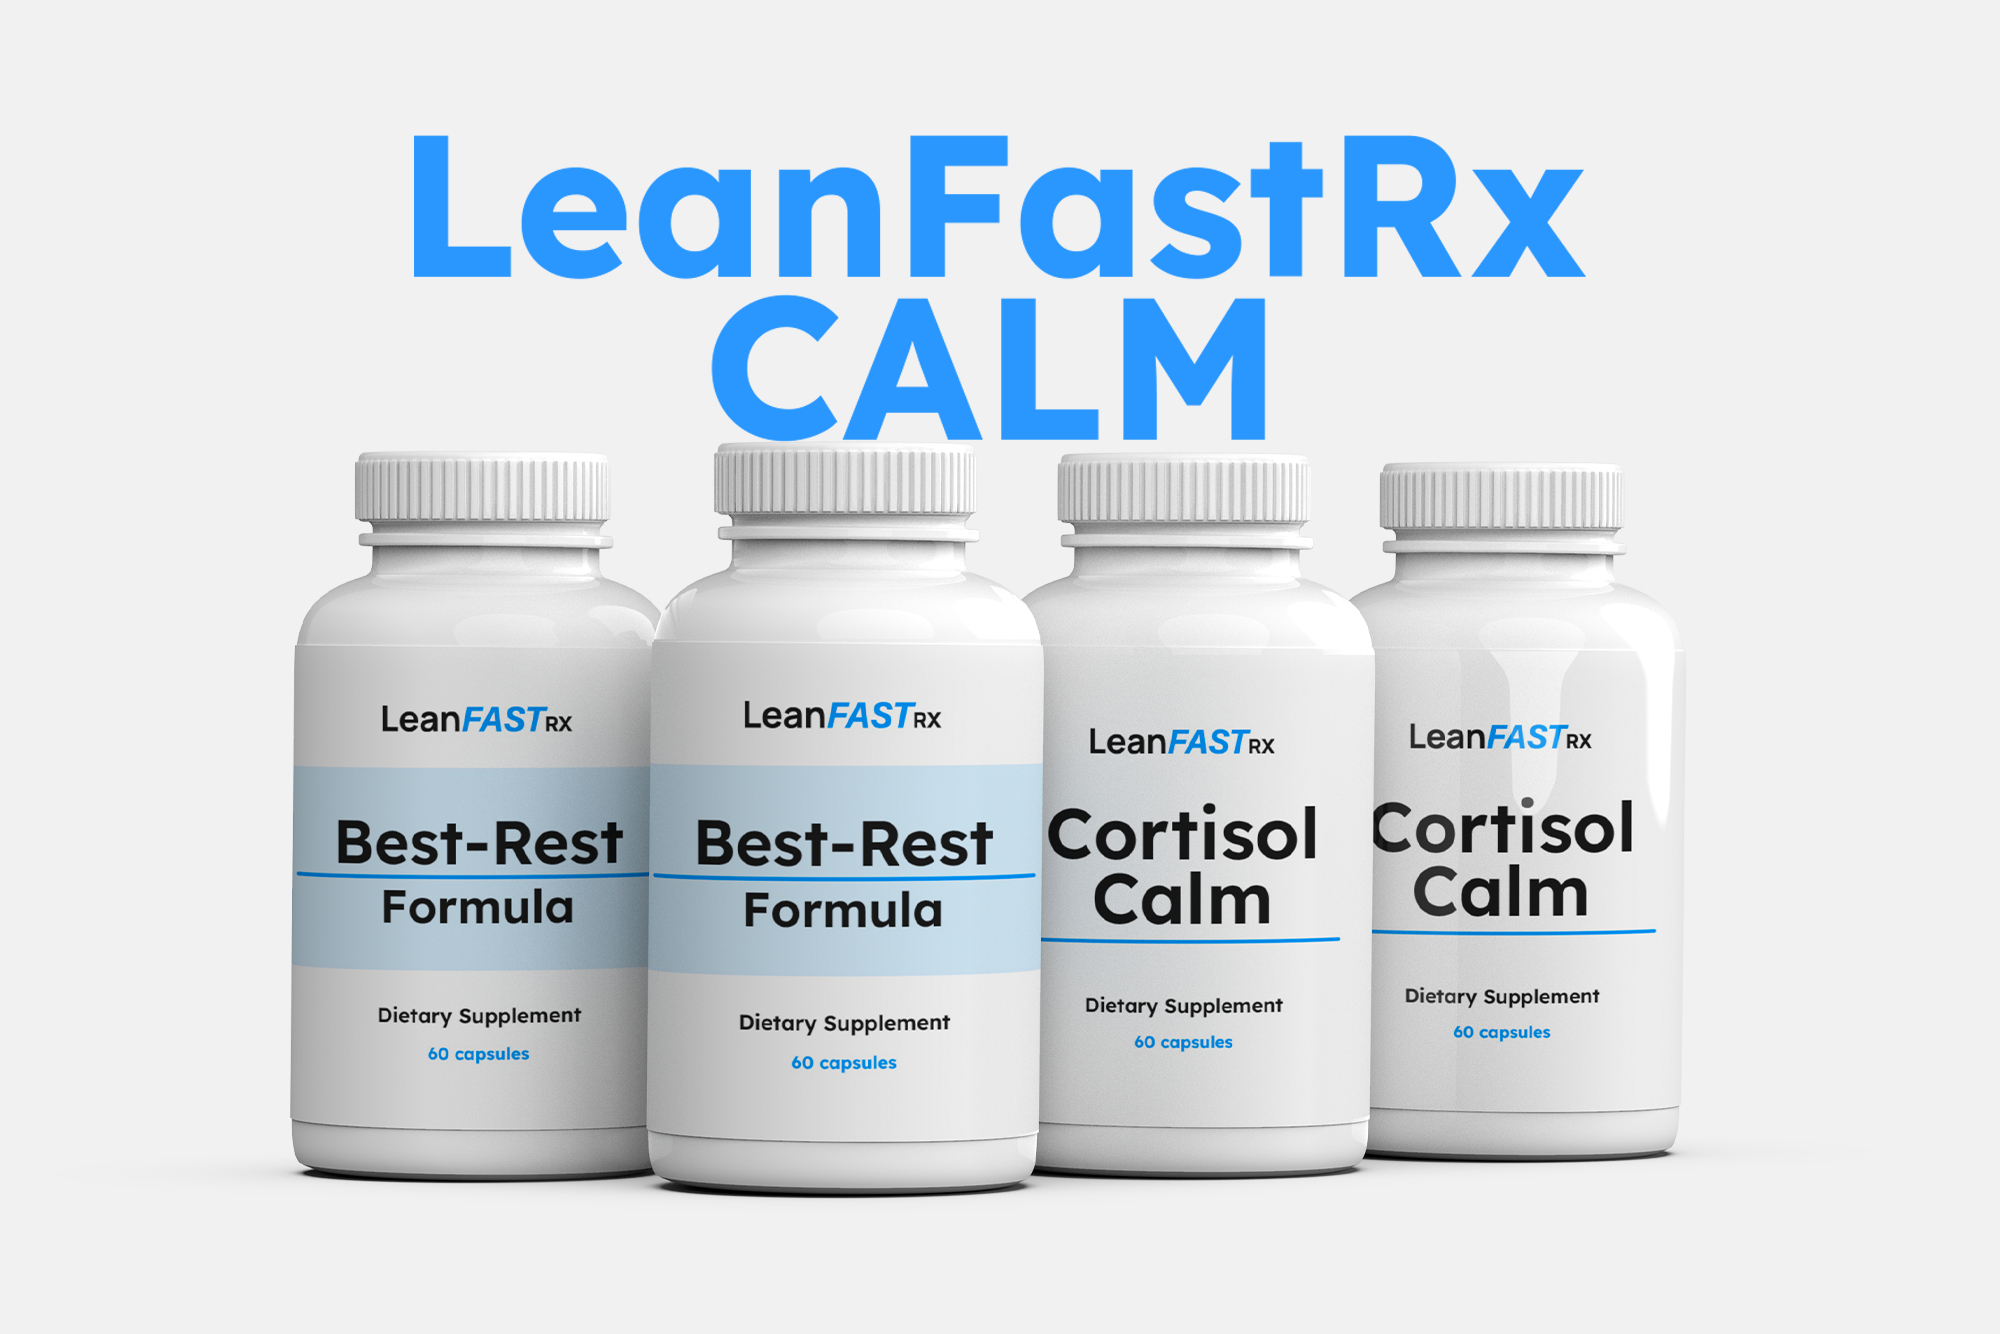 LeanFastRx Calm